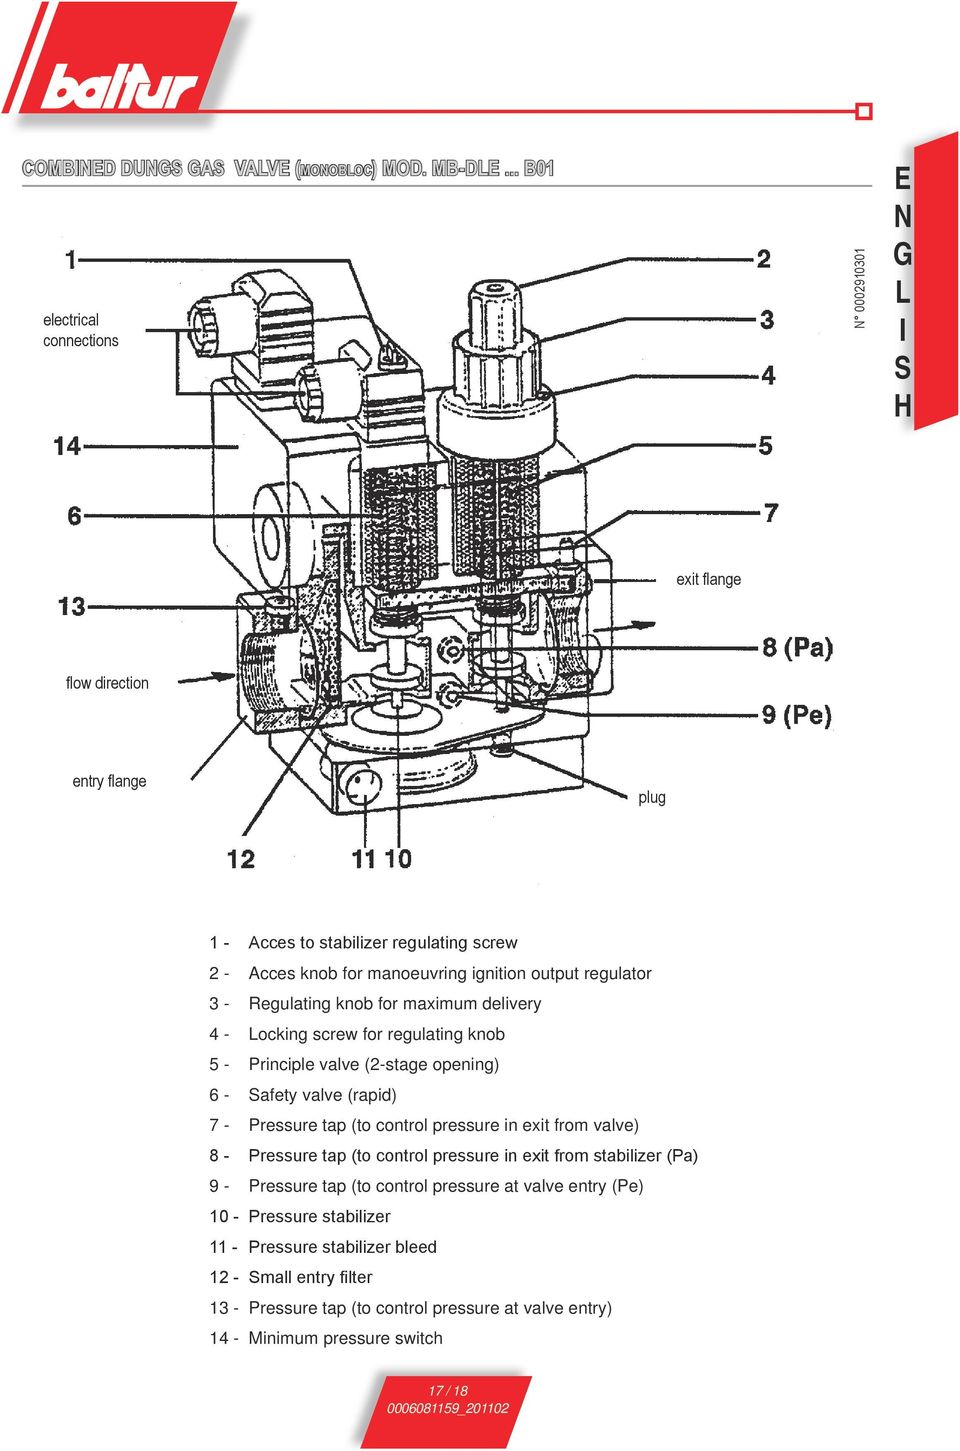 output regulator 3 - Regulating knob for maximum delivery 4 - ocking screw for regulating knob 5 - Principle valve (2-stage opening) 6 - Safety valve (rapid) 7 - Pressure tap (to